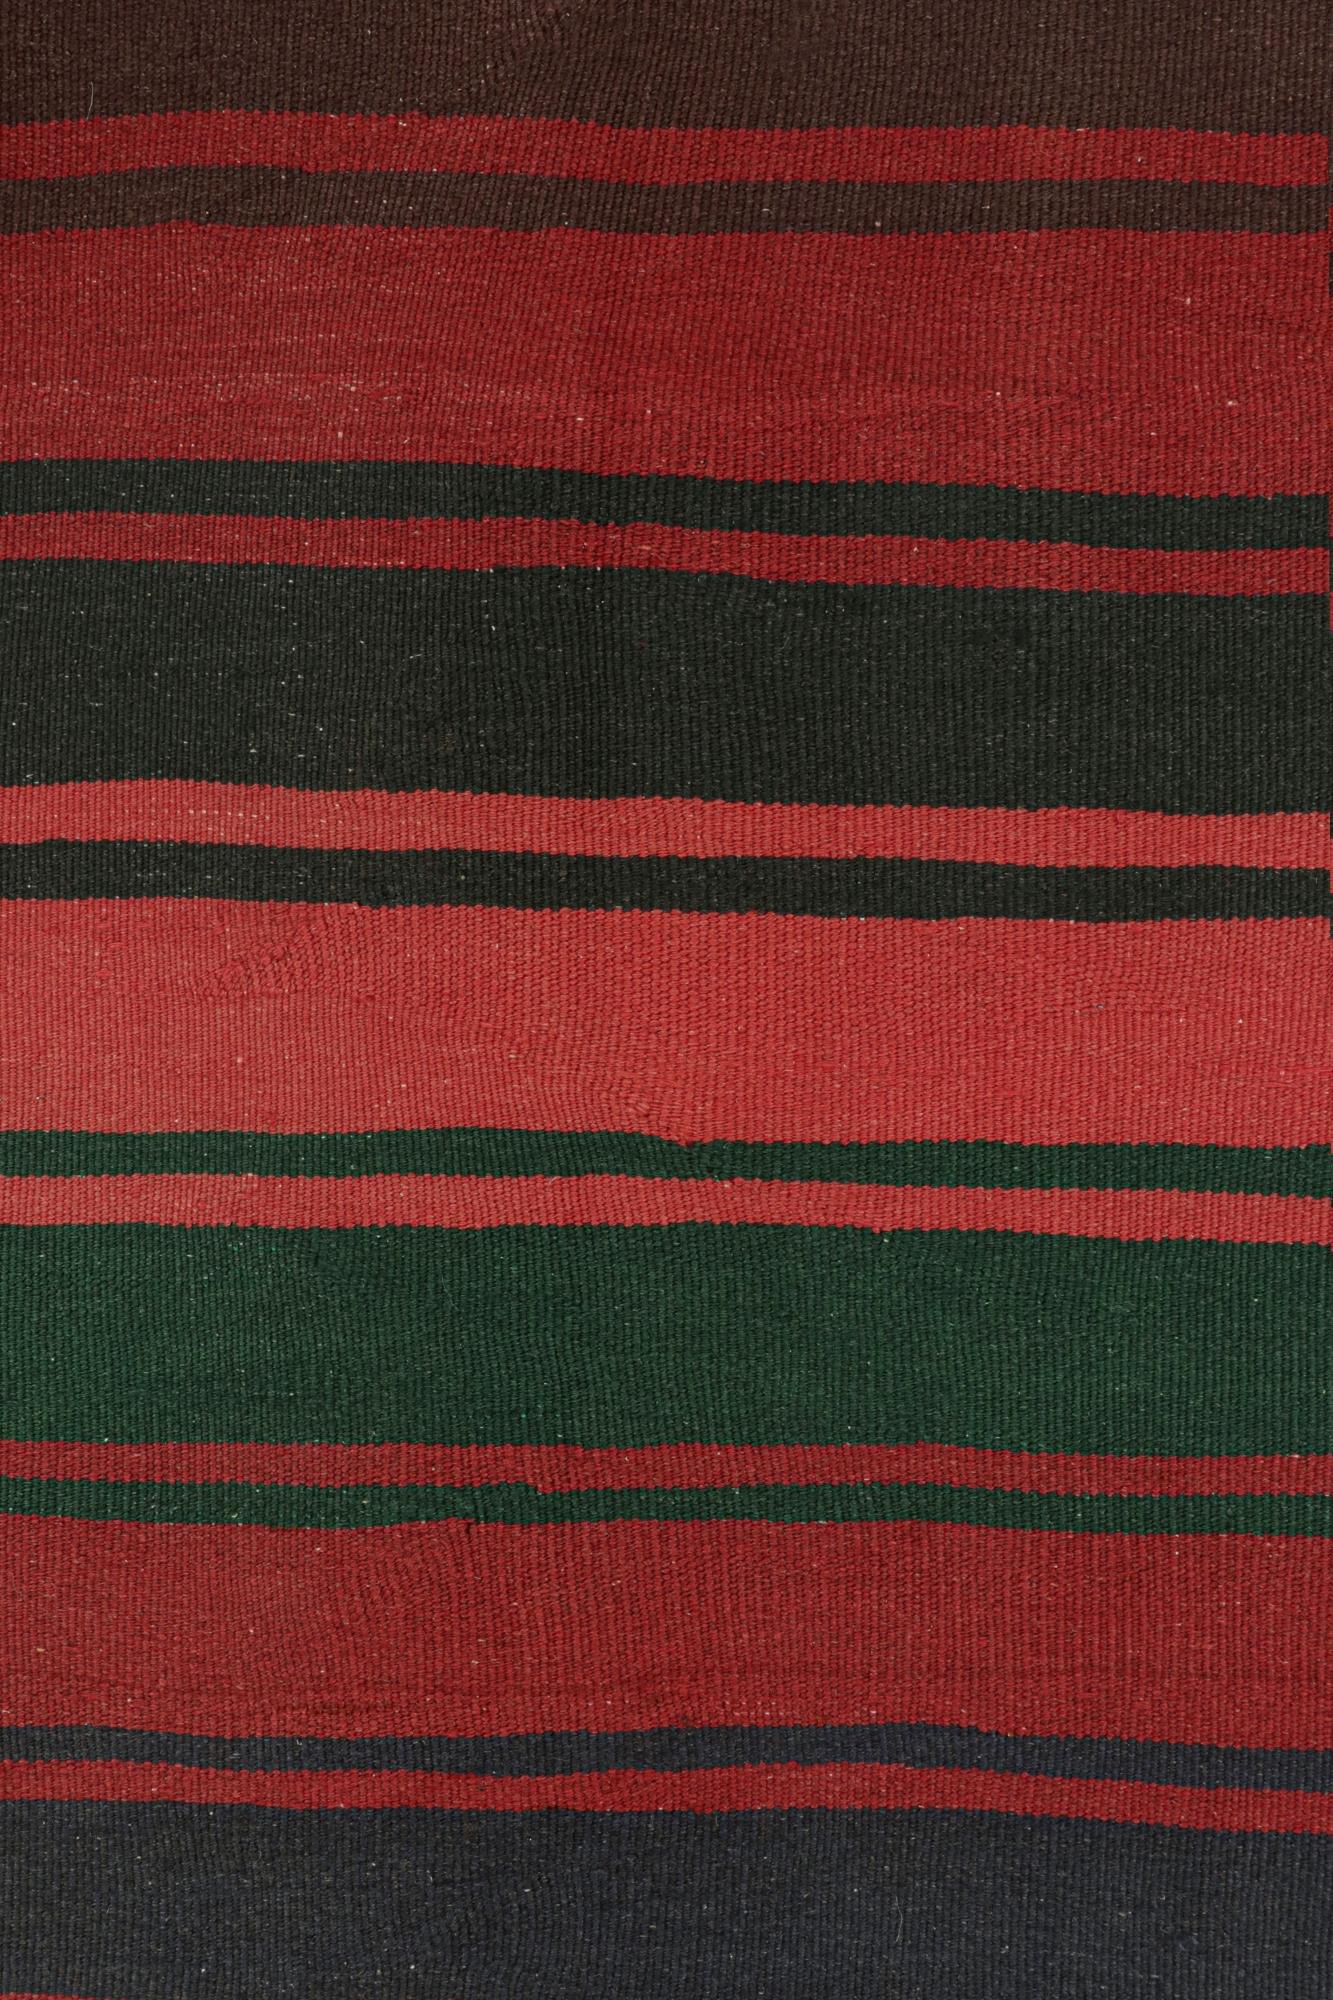 Tribal Vintage Bidjar Persian Kilim in Burgundy with Multicolor Stripes For Sale